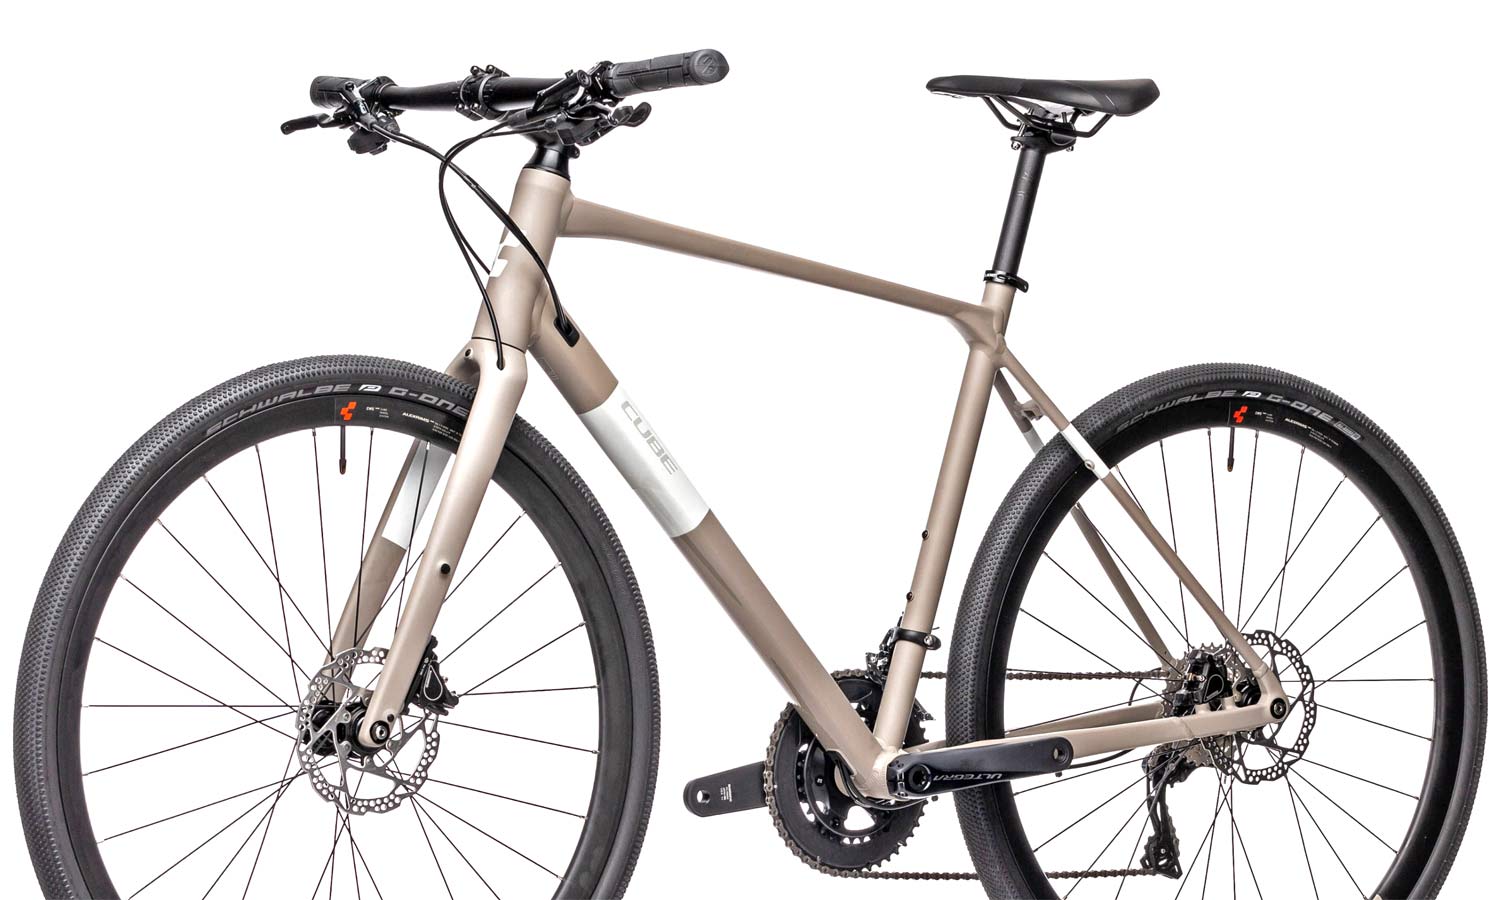 2021 Cube SL Road bike is an affordable, versatile alloy flat bar all-road & gravel bike, non driveside detail